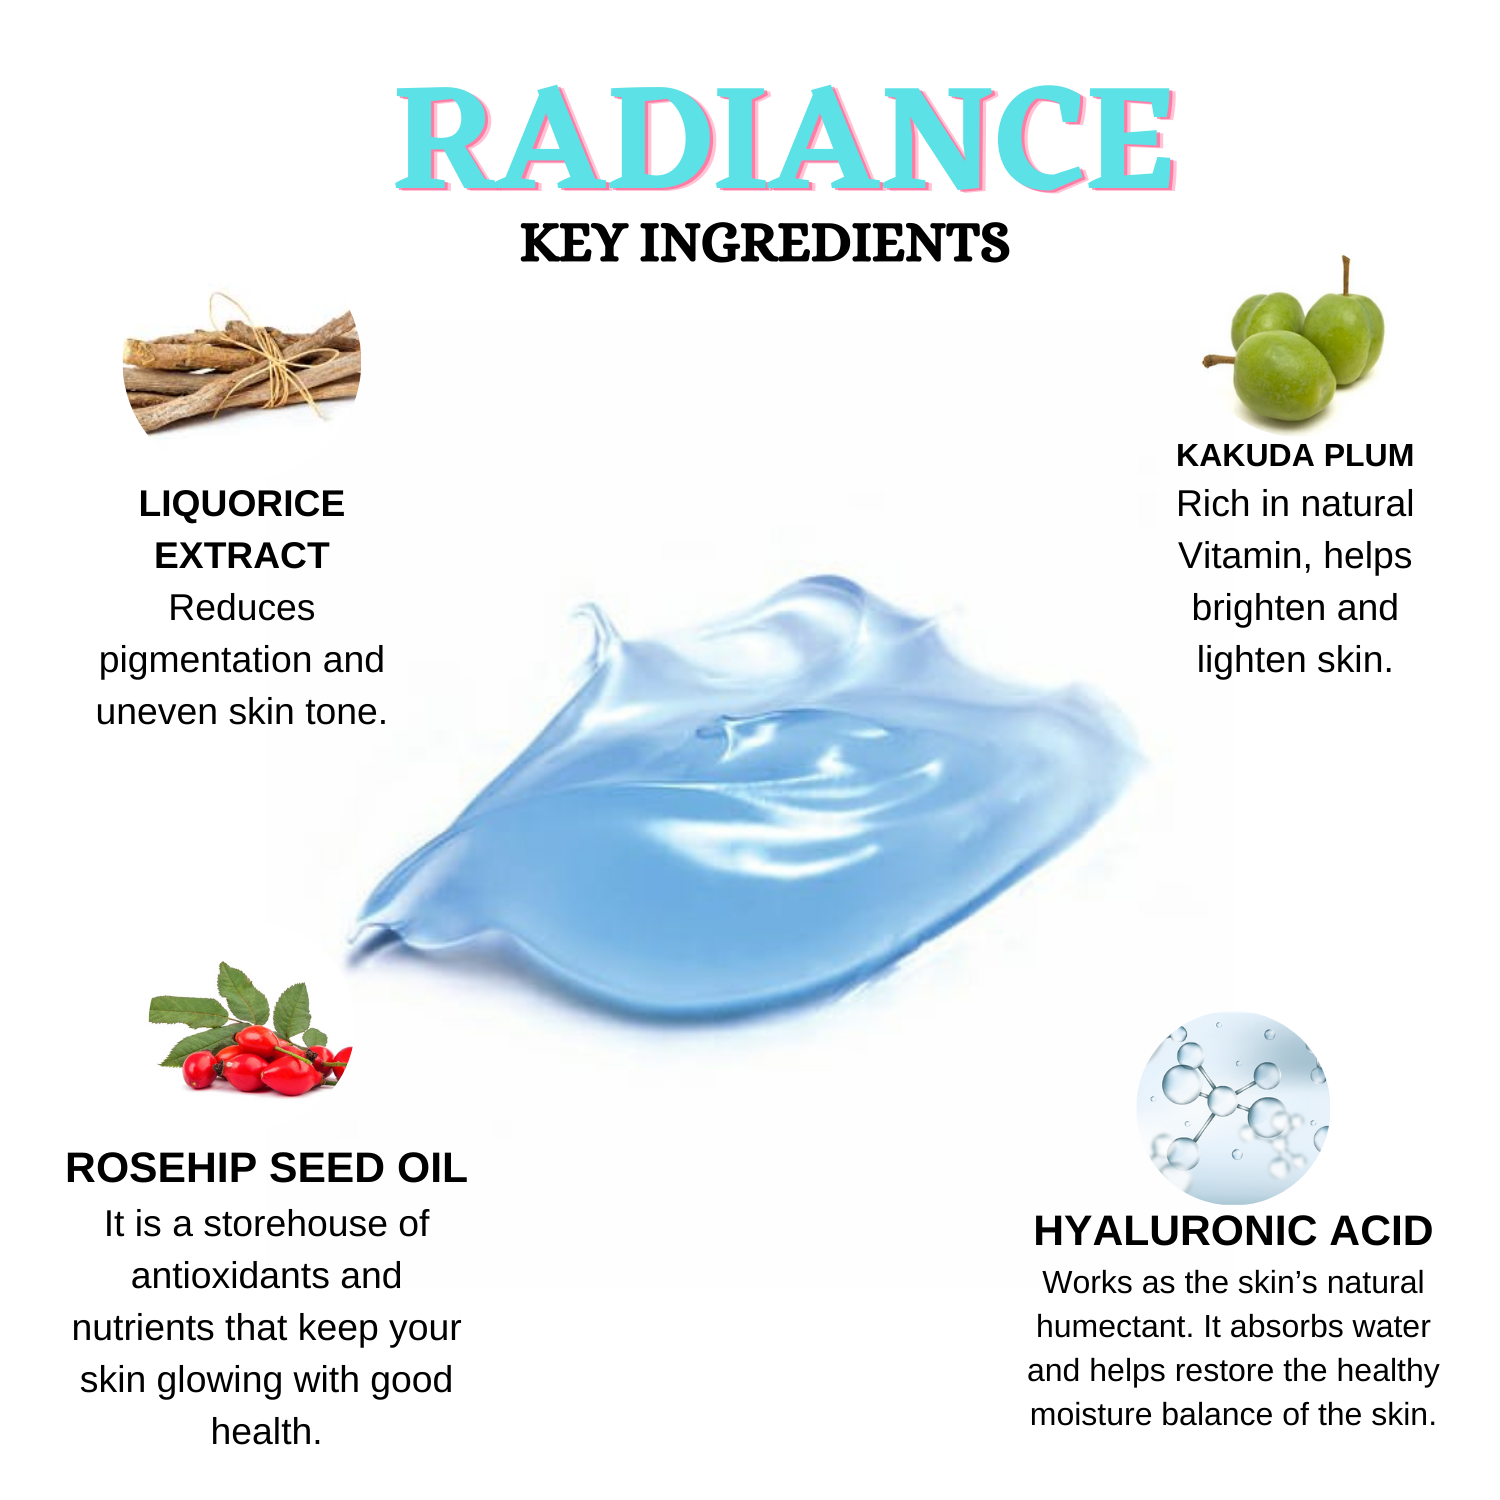 Radiance Ultra Hydrating & Brightening Gel w/ Vitamin C & Hyaluronic Acid